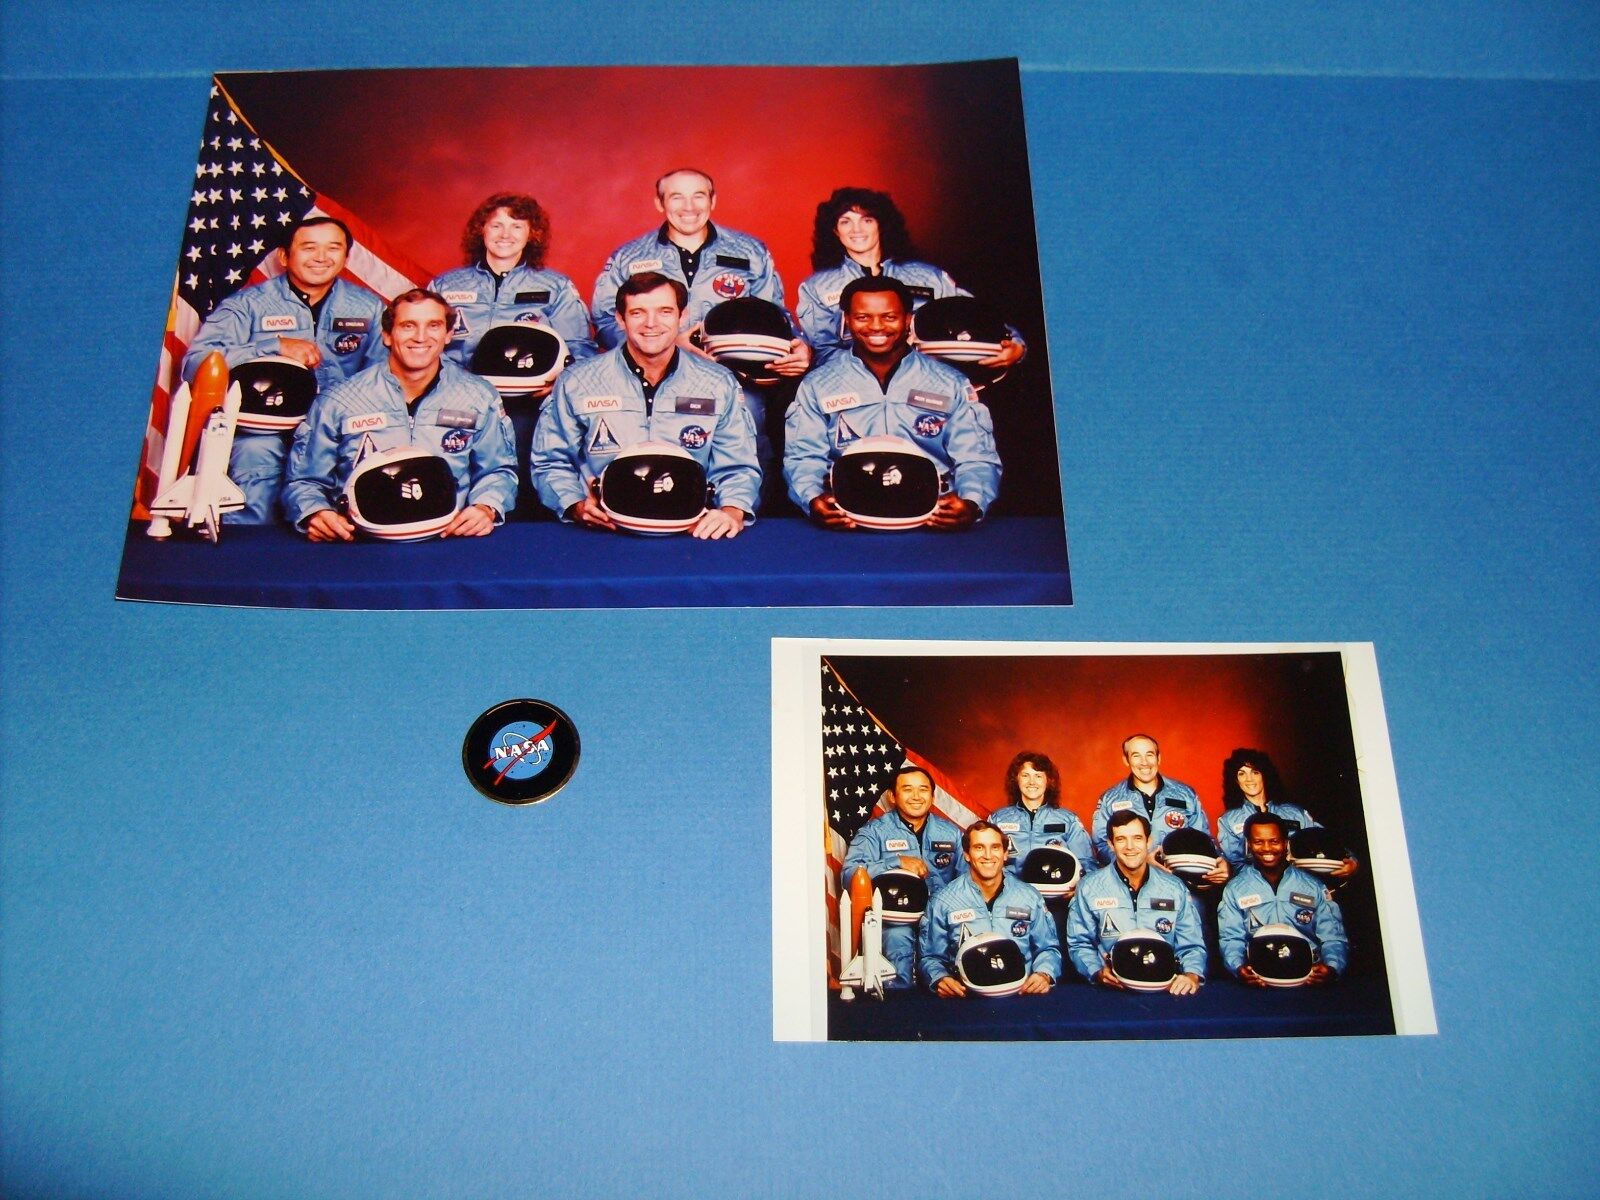 NASA SPACE SHUTTLE STS-51 L CHALLENGER FALLEN HEROES CREW PHOTO KODAK MFG.PAPER